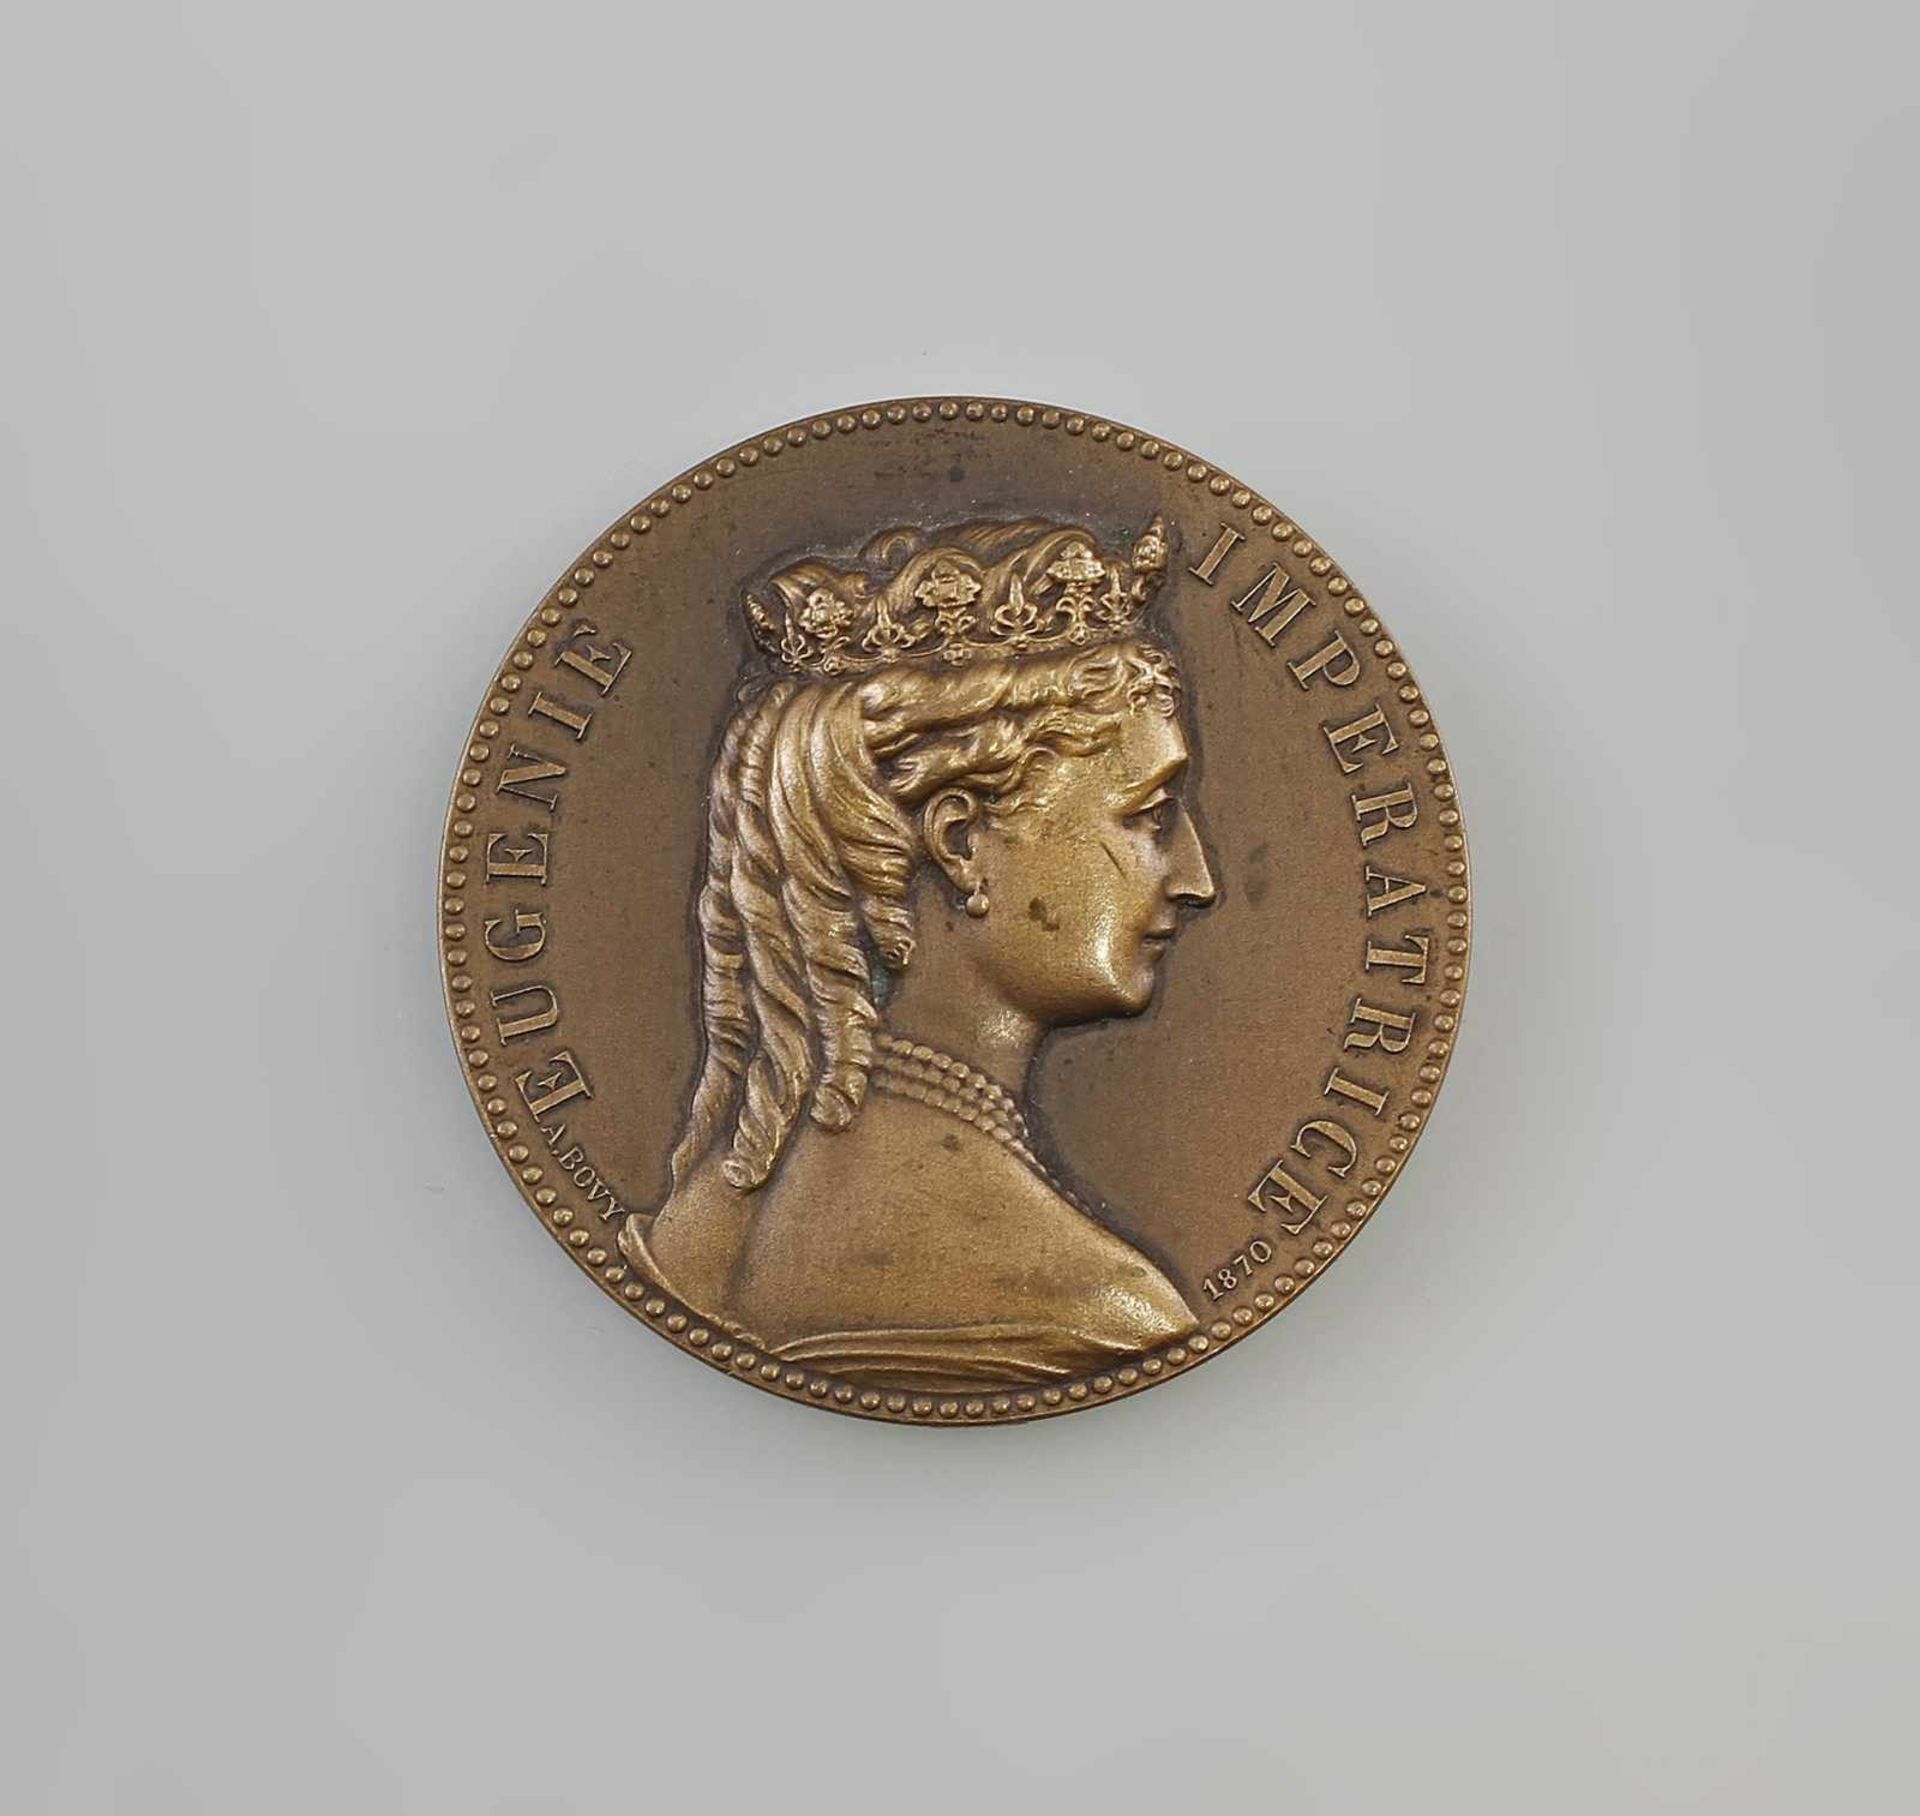 Bronze-Plakette Eugenie Imperatrice 1870 Vs Porträt Eugenie Imperatrice (Eugénie de Montijo) mit